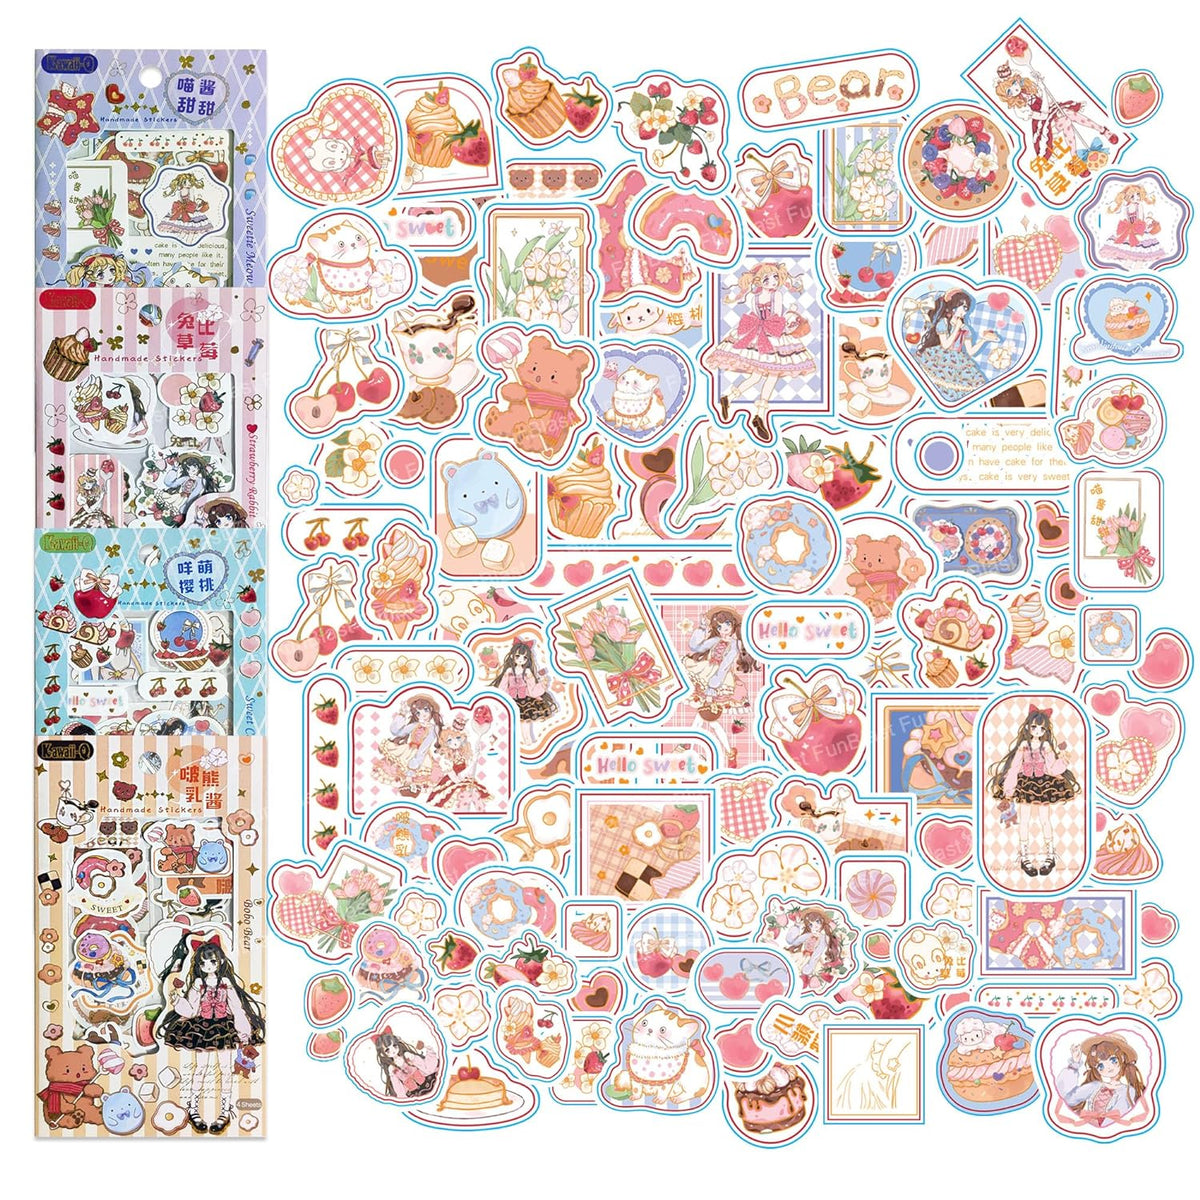 Kawaii Stickers Set – 16 Sheet (100+ Pcs) DIY 3D Stickers for Girls, Aesthetic Sticker, Stickers for Journaling, Scrapbooking, Cute Stickers Set (BoboBear-4X4=16Sheet)